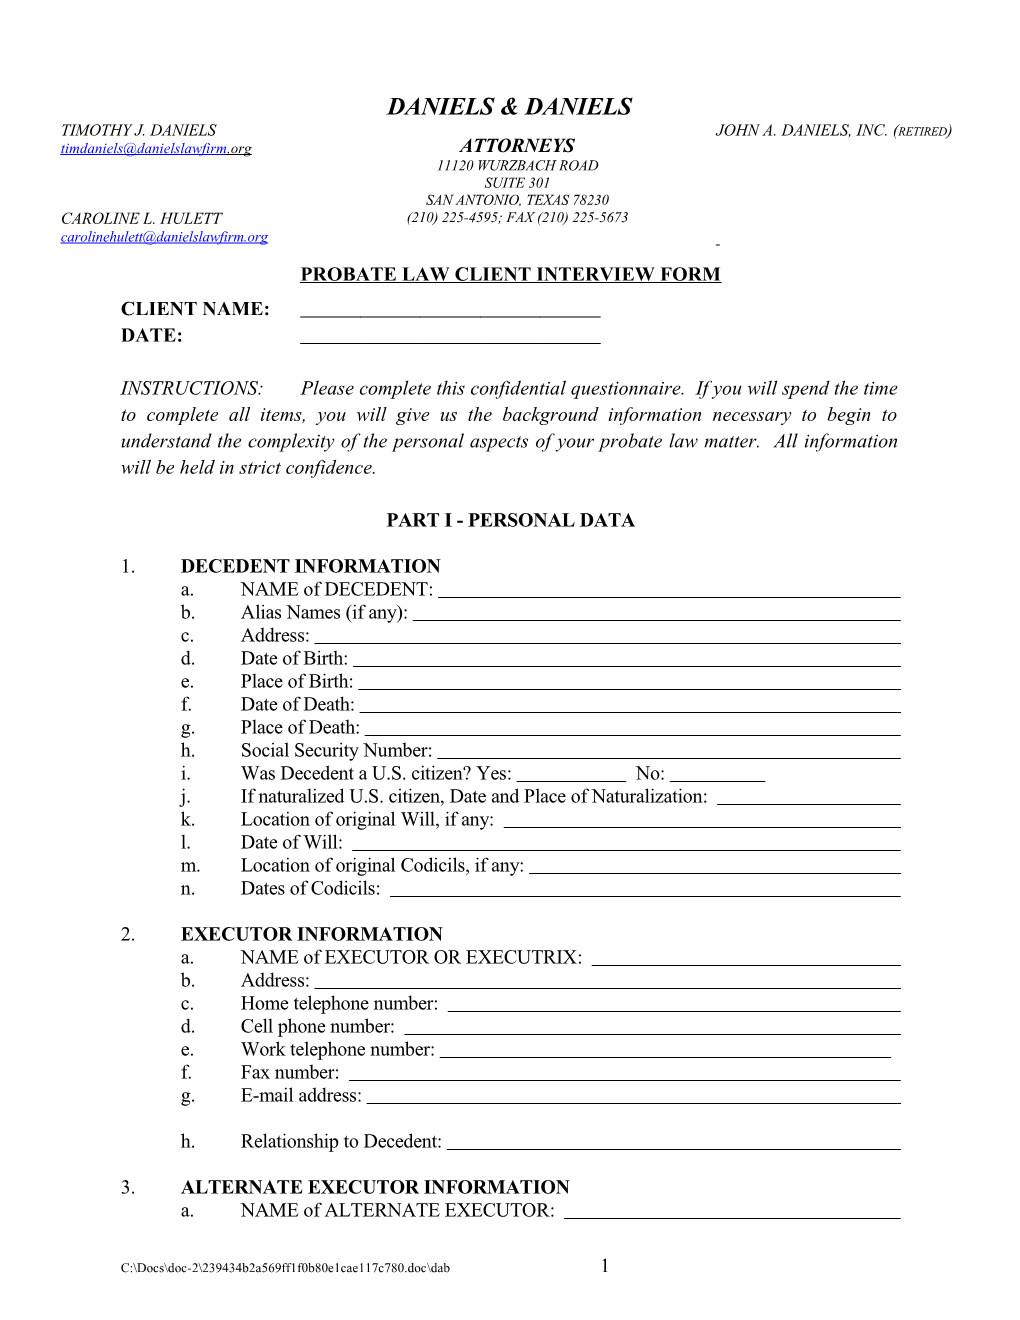 Probate Law Client Interview Form